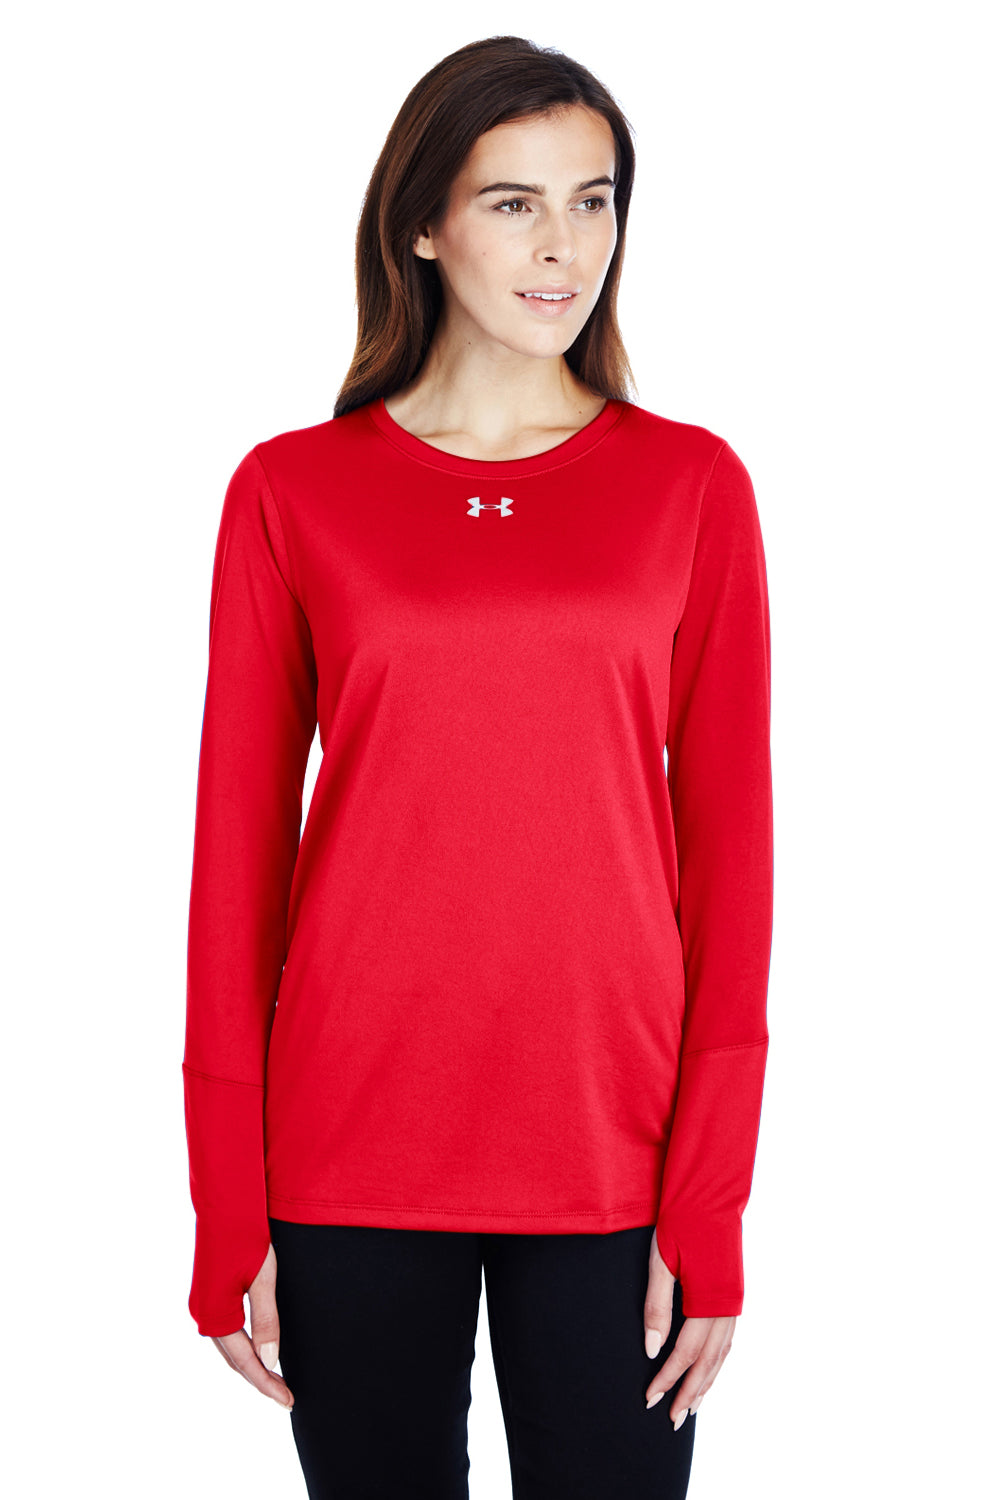 Under Armour 1305681 Womens Red Locker 2.0 Moisture Wicking Long Sleeve  Crewneck T-Shirt — BigTopShirtShop.com